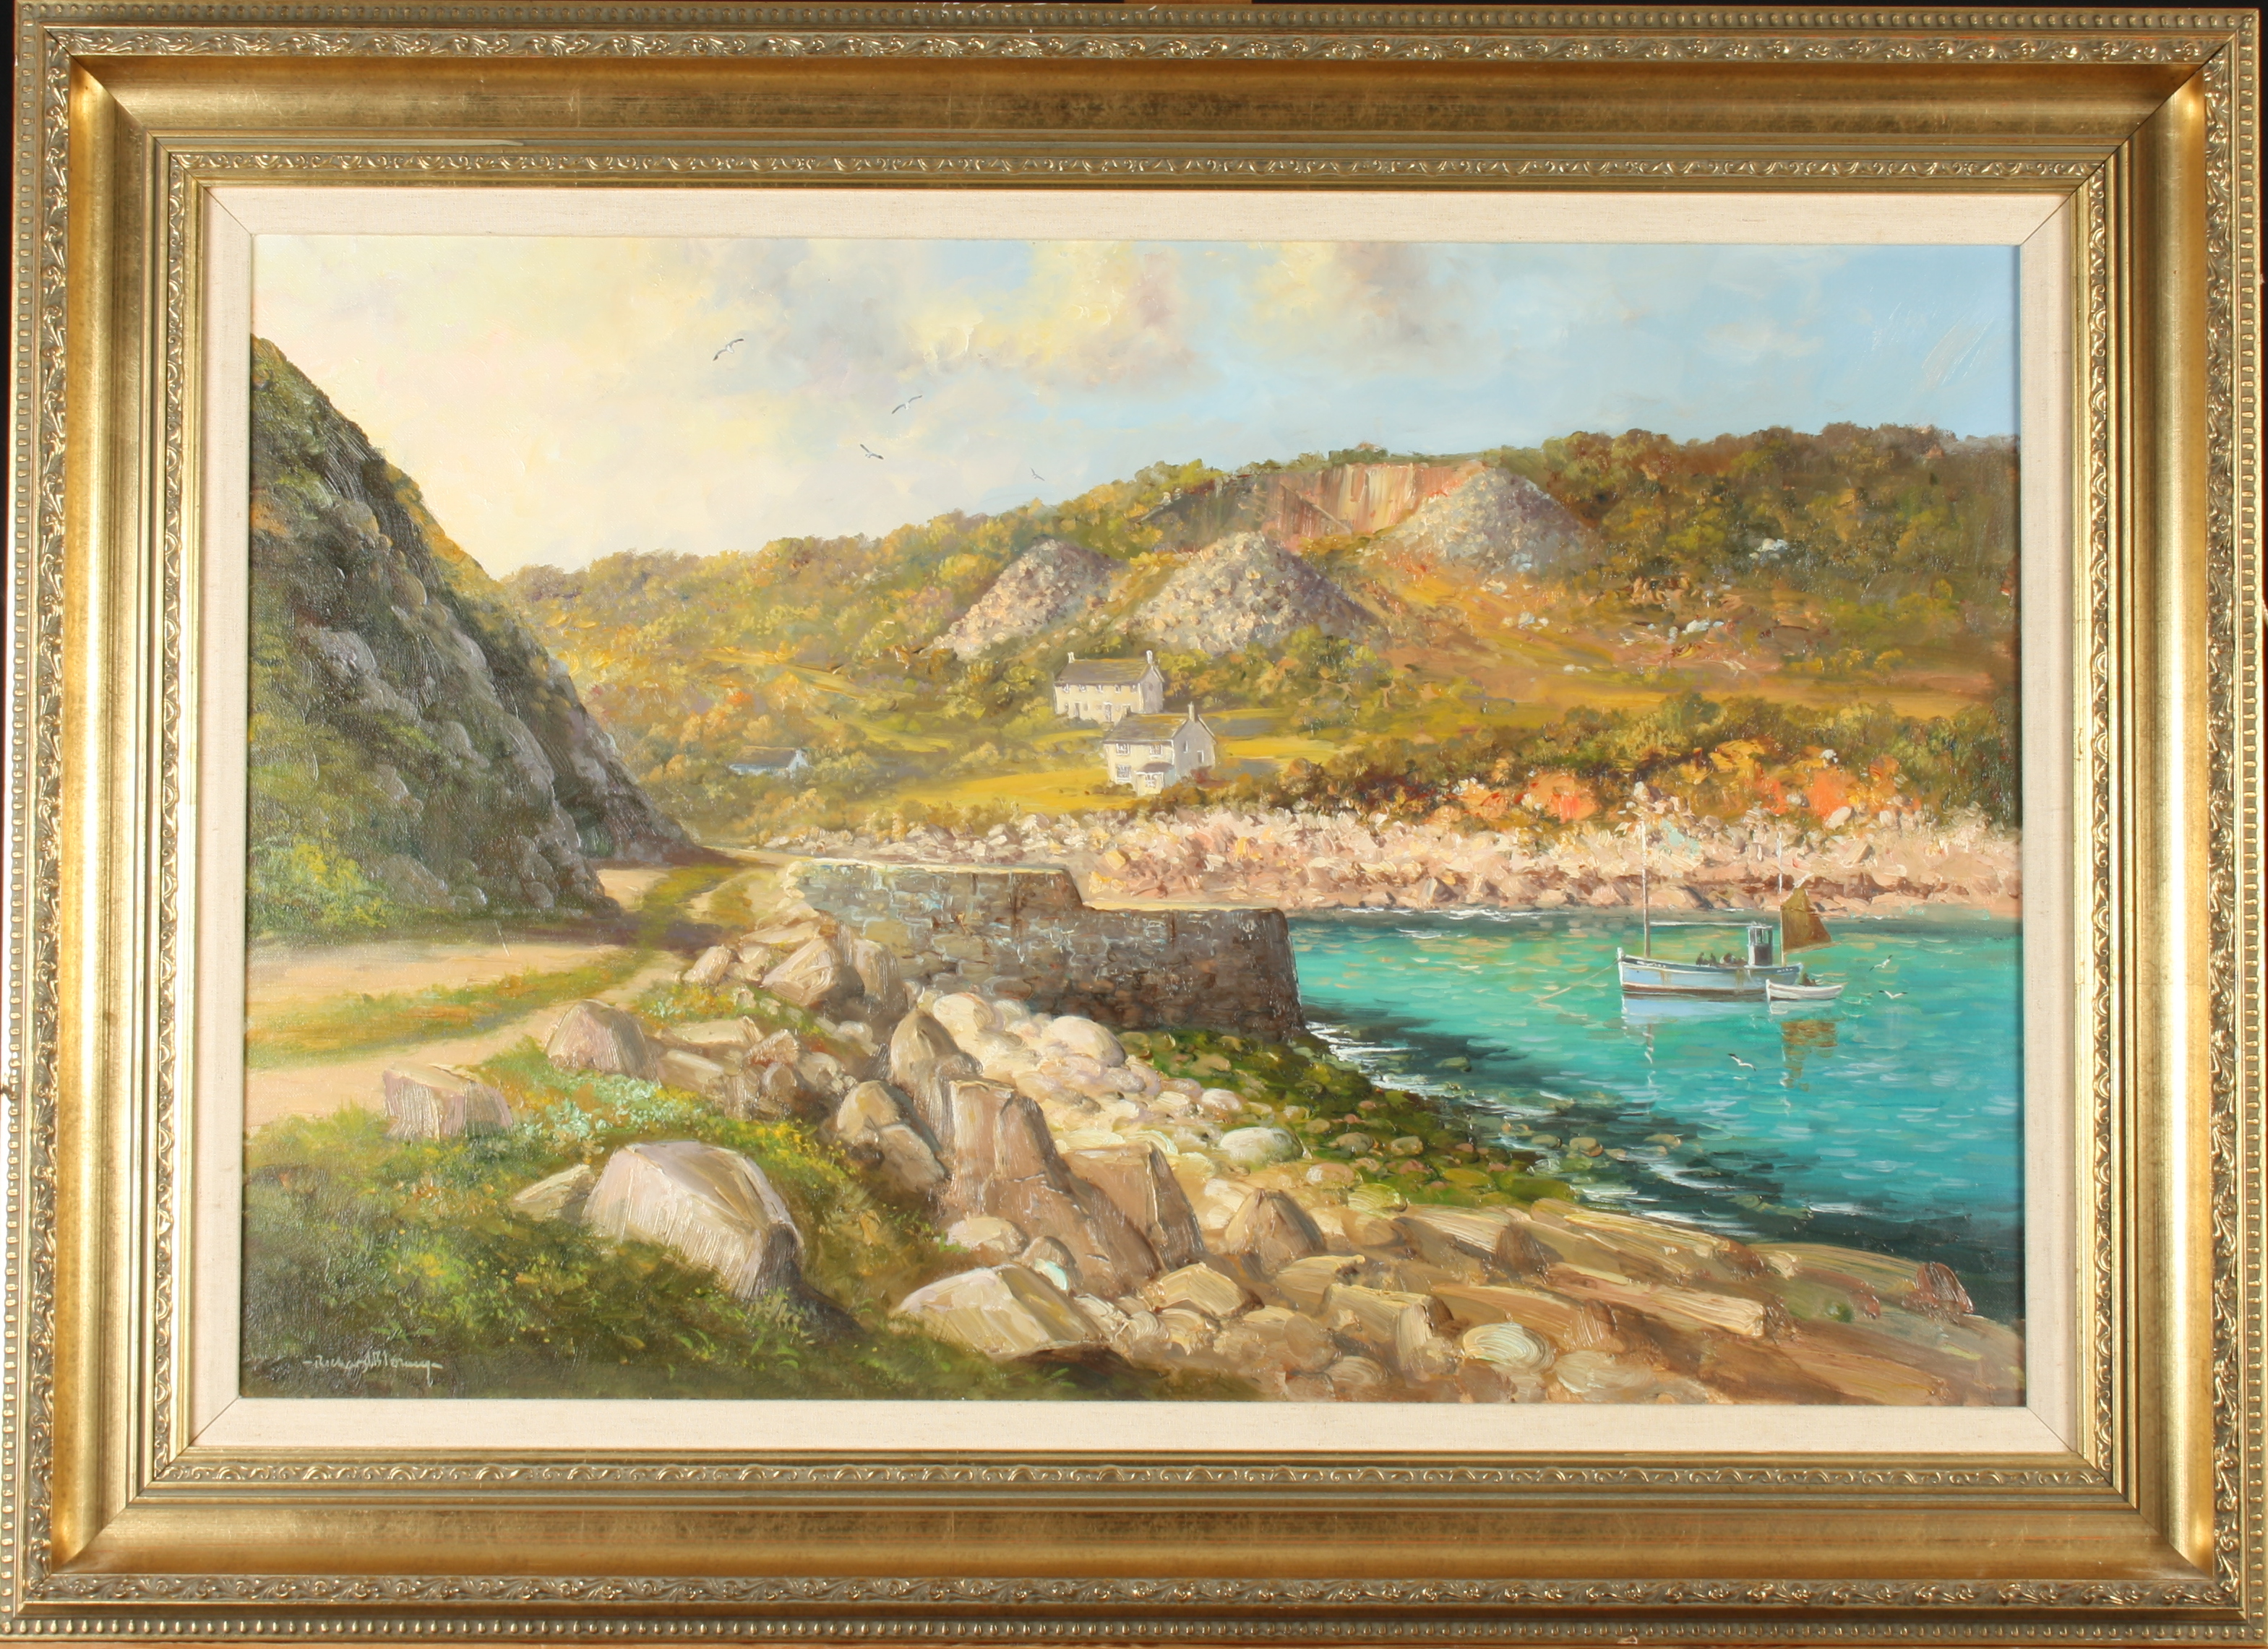 Richard BLOWEY Lamorna Cove Oil on canvas Signed 50 x 75cm - Image 2 of 2